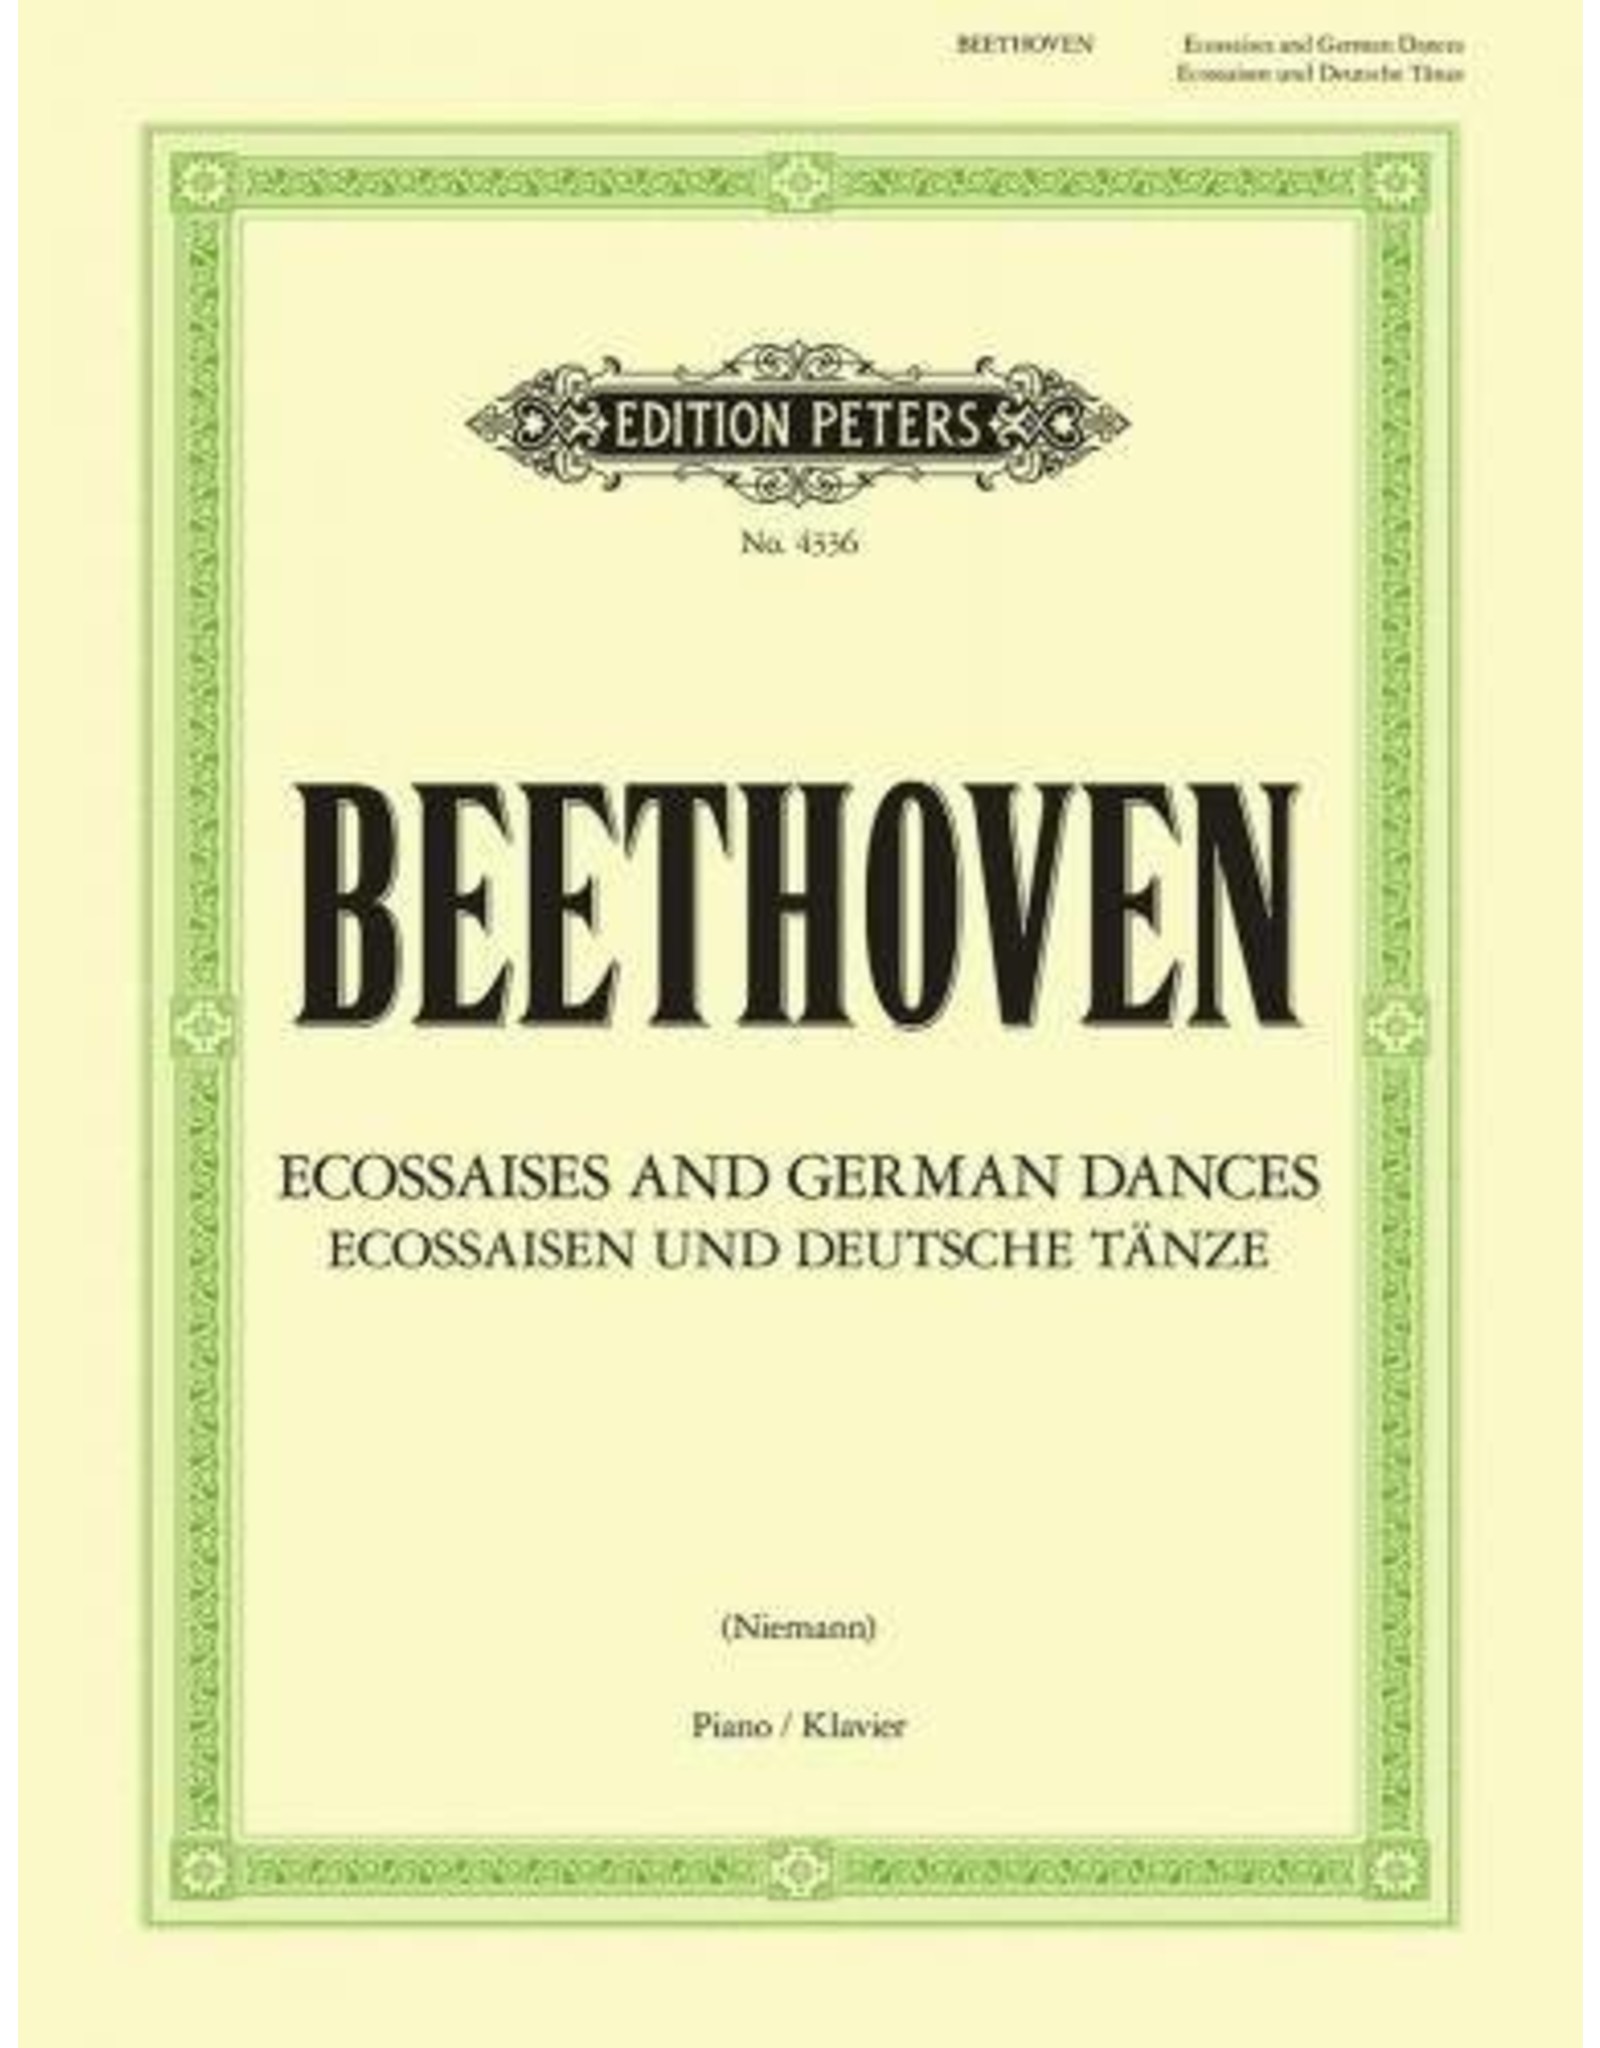 Edition Peters Beethoven - Ecossaisen and Deutsche Tanze